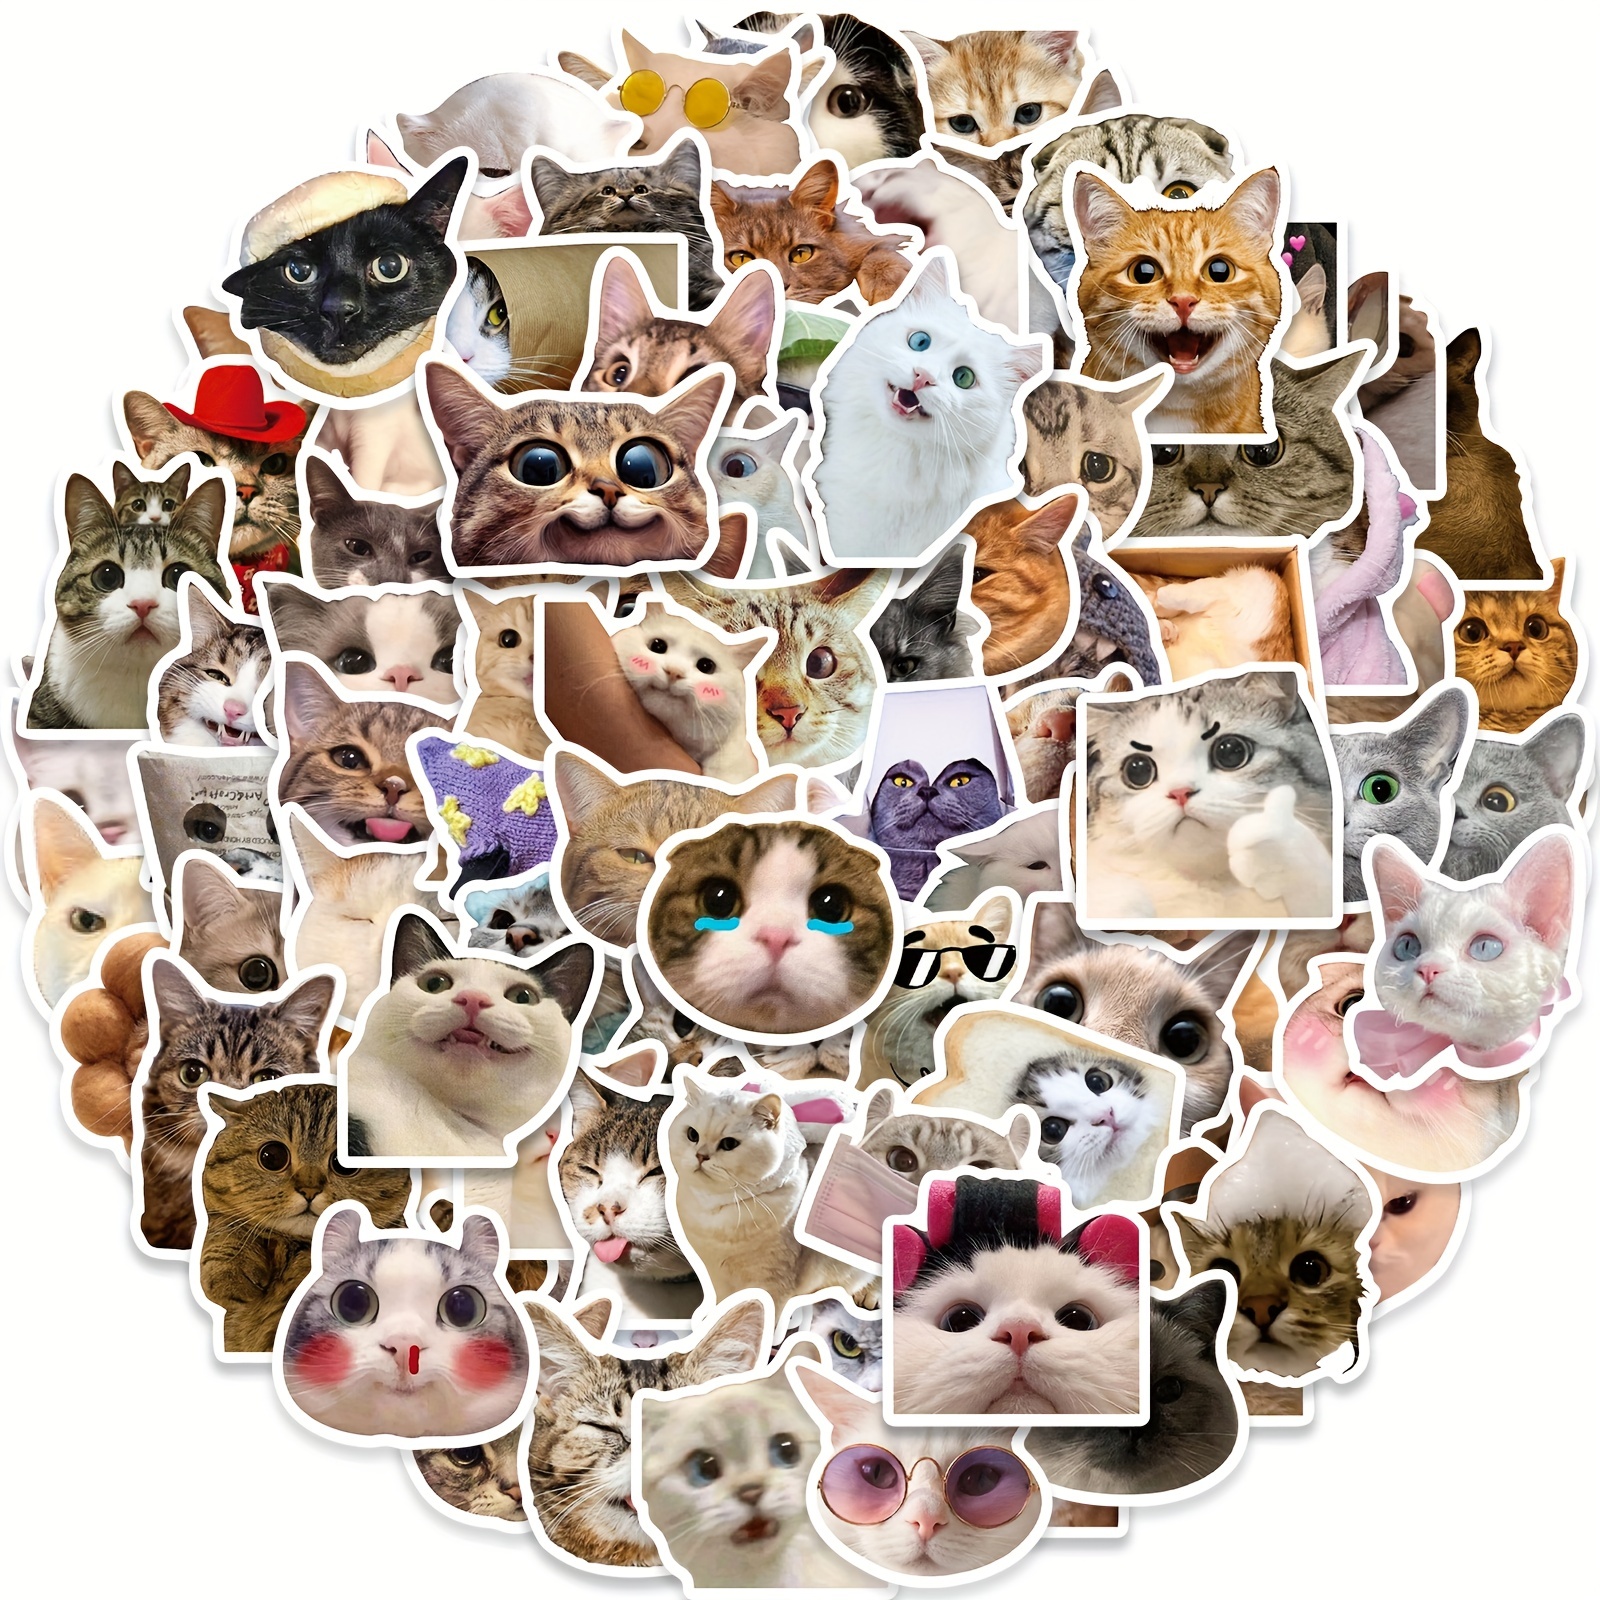 100pcs Cute Cat Stickers,Kawaii Funny Cat Meme Decals Vinyl Waterproof Stickers for Water Bottle Laptop Bumper Phone Guitar